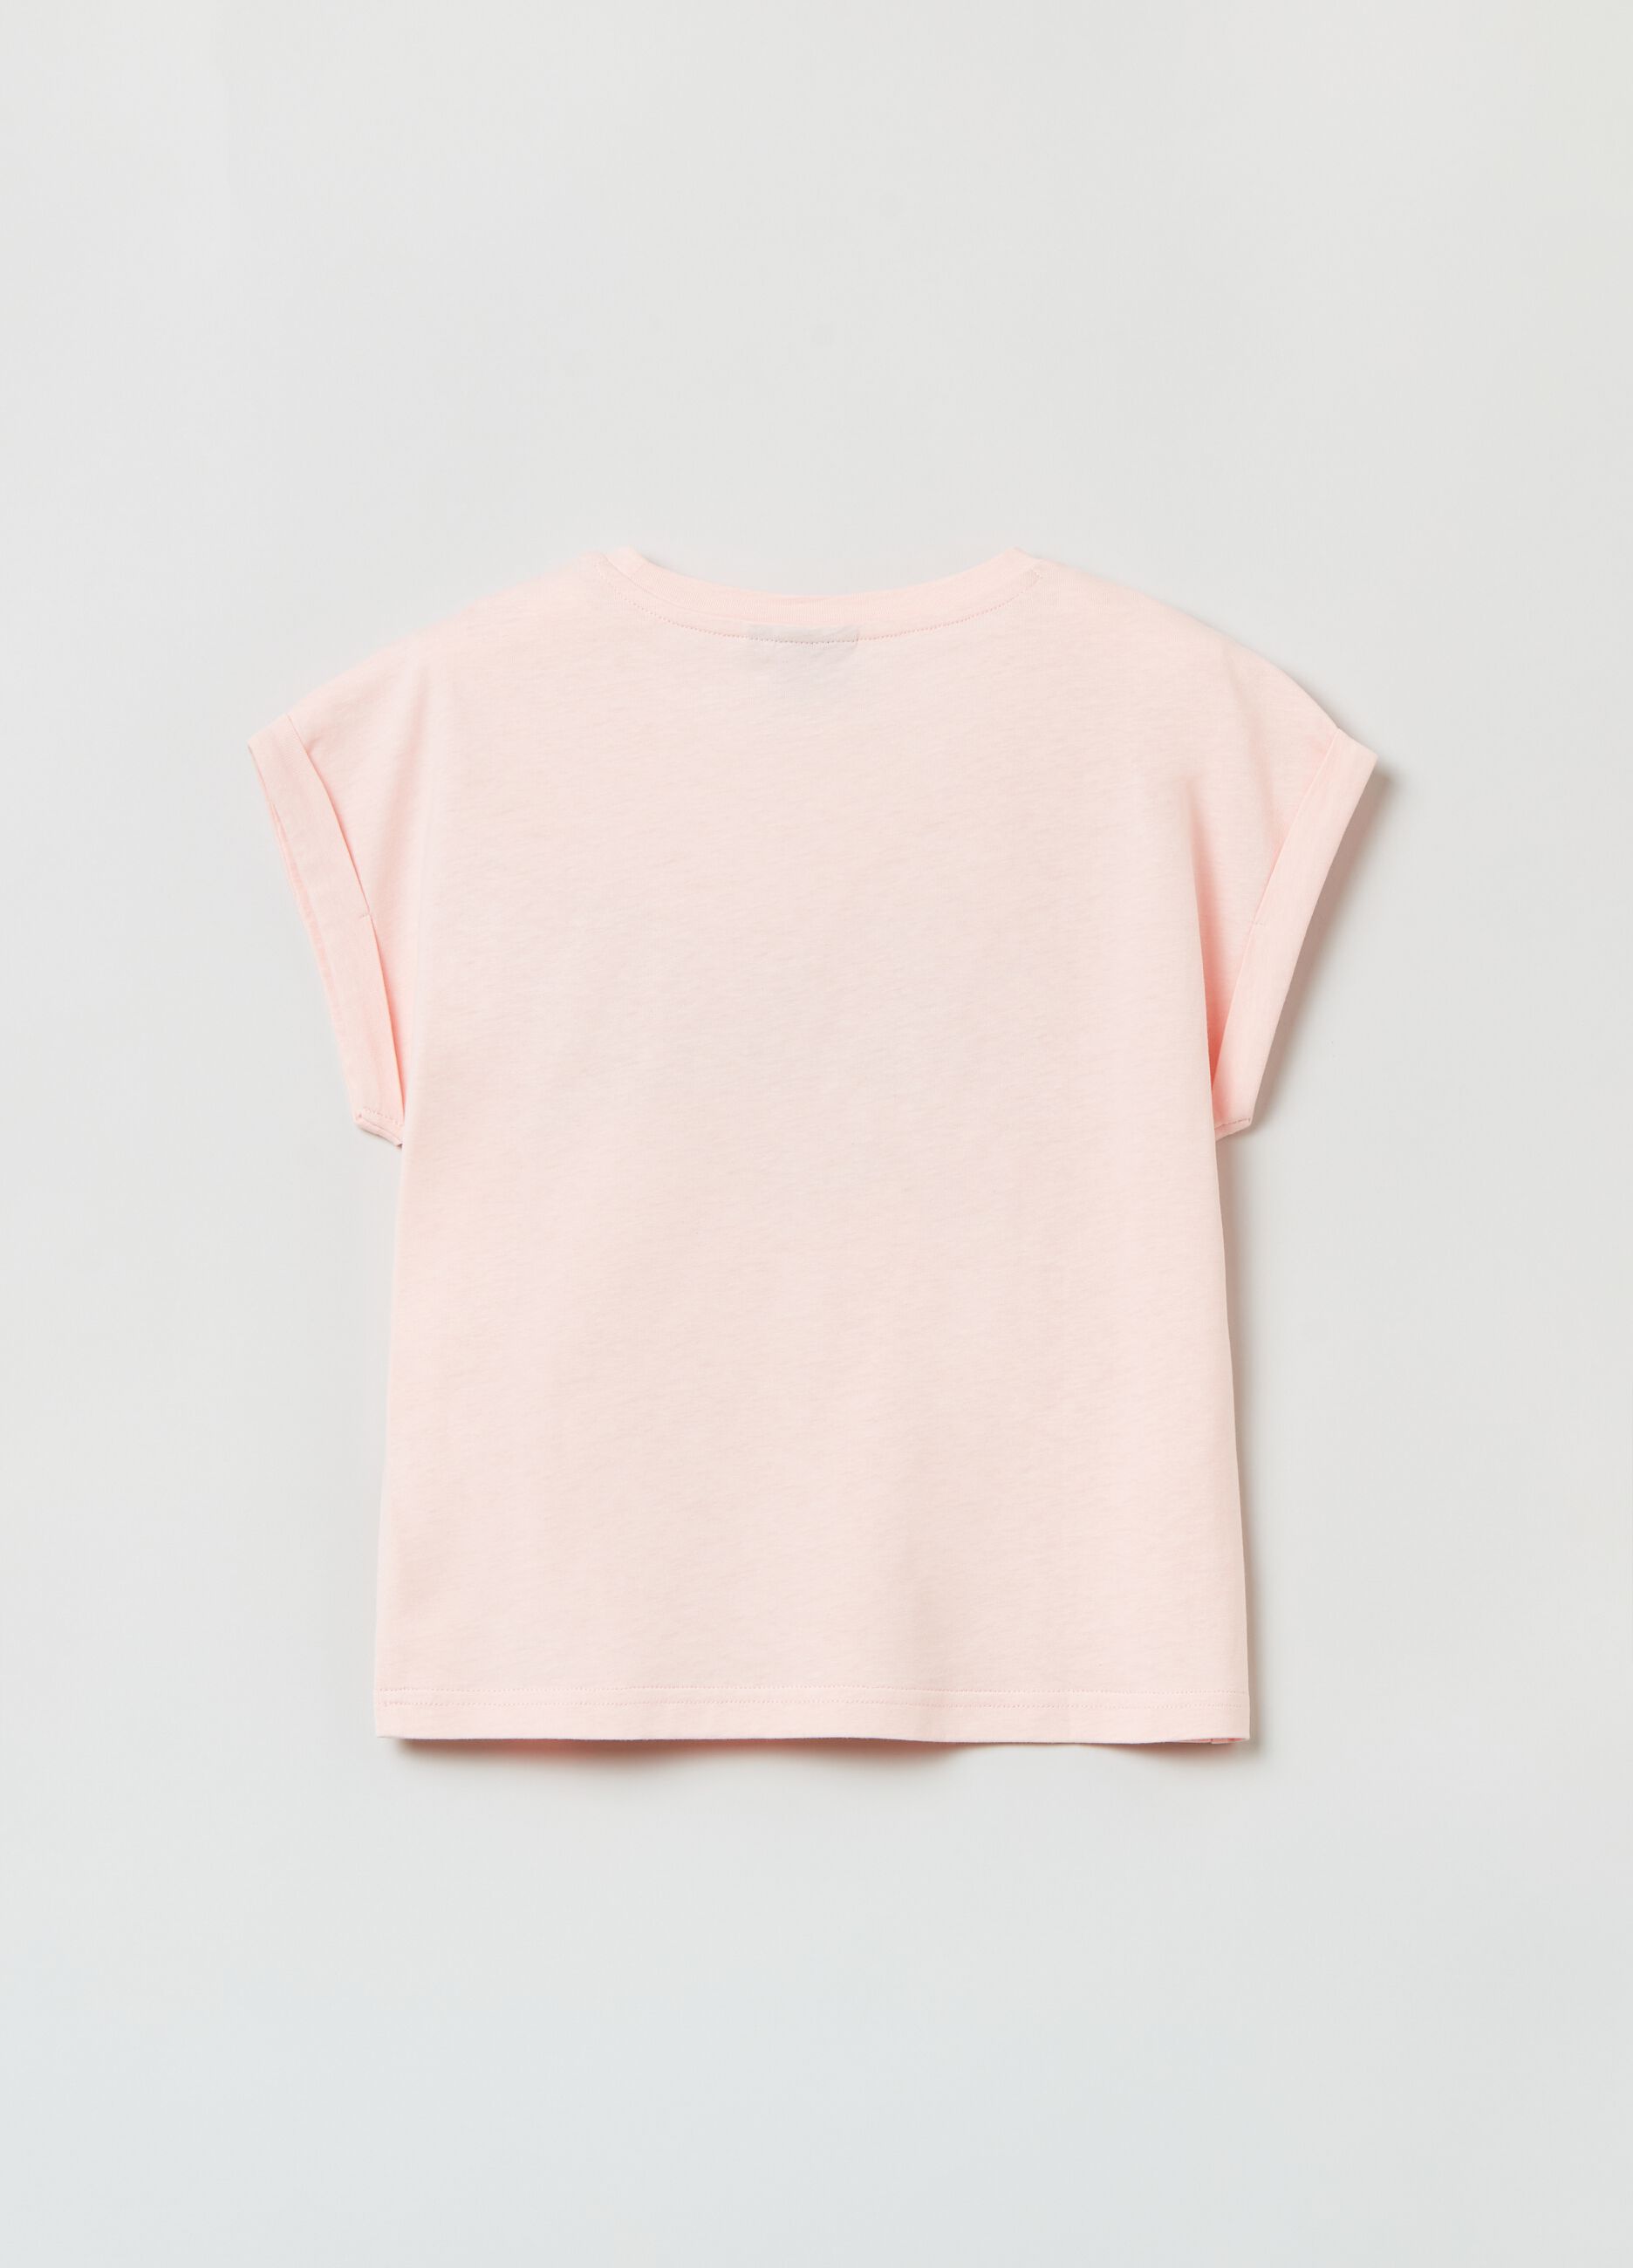 Everlast sleeveless cotton T-shirt